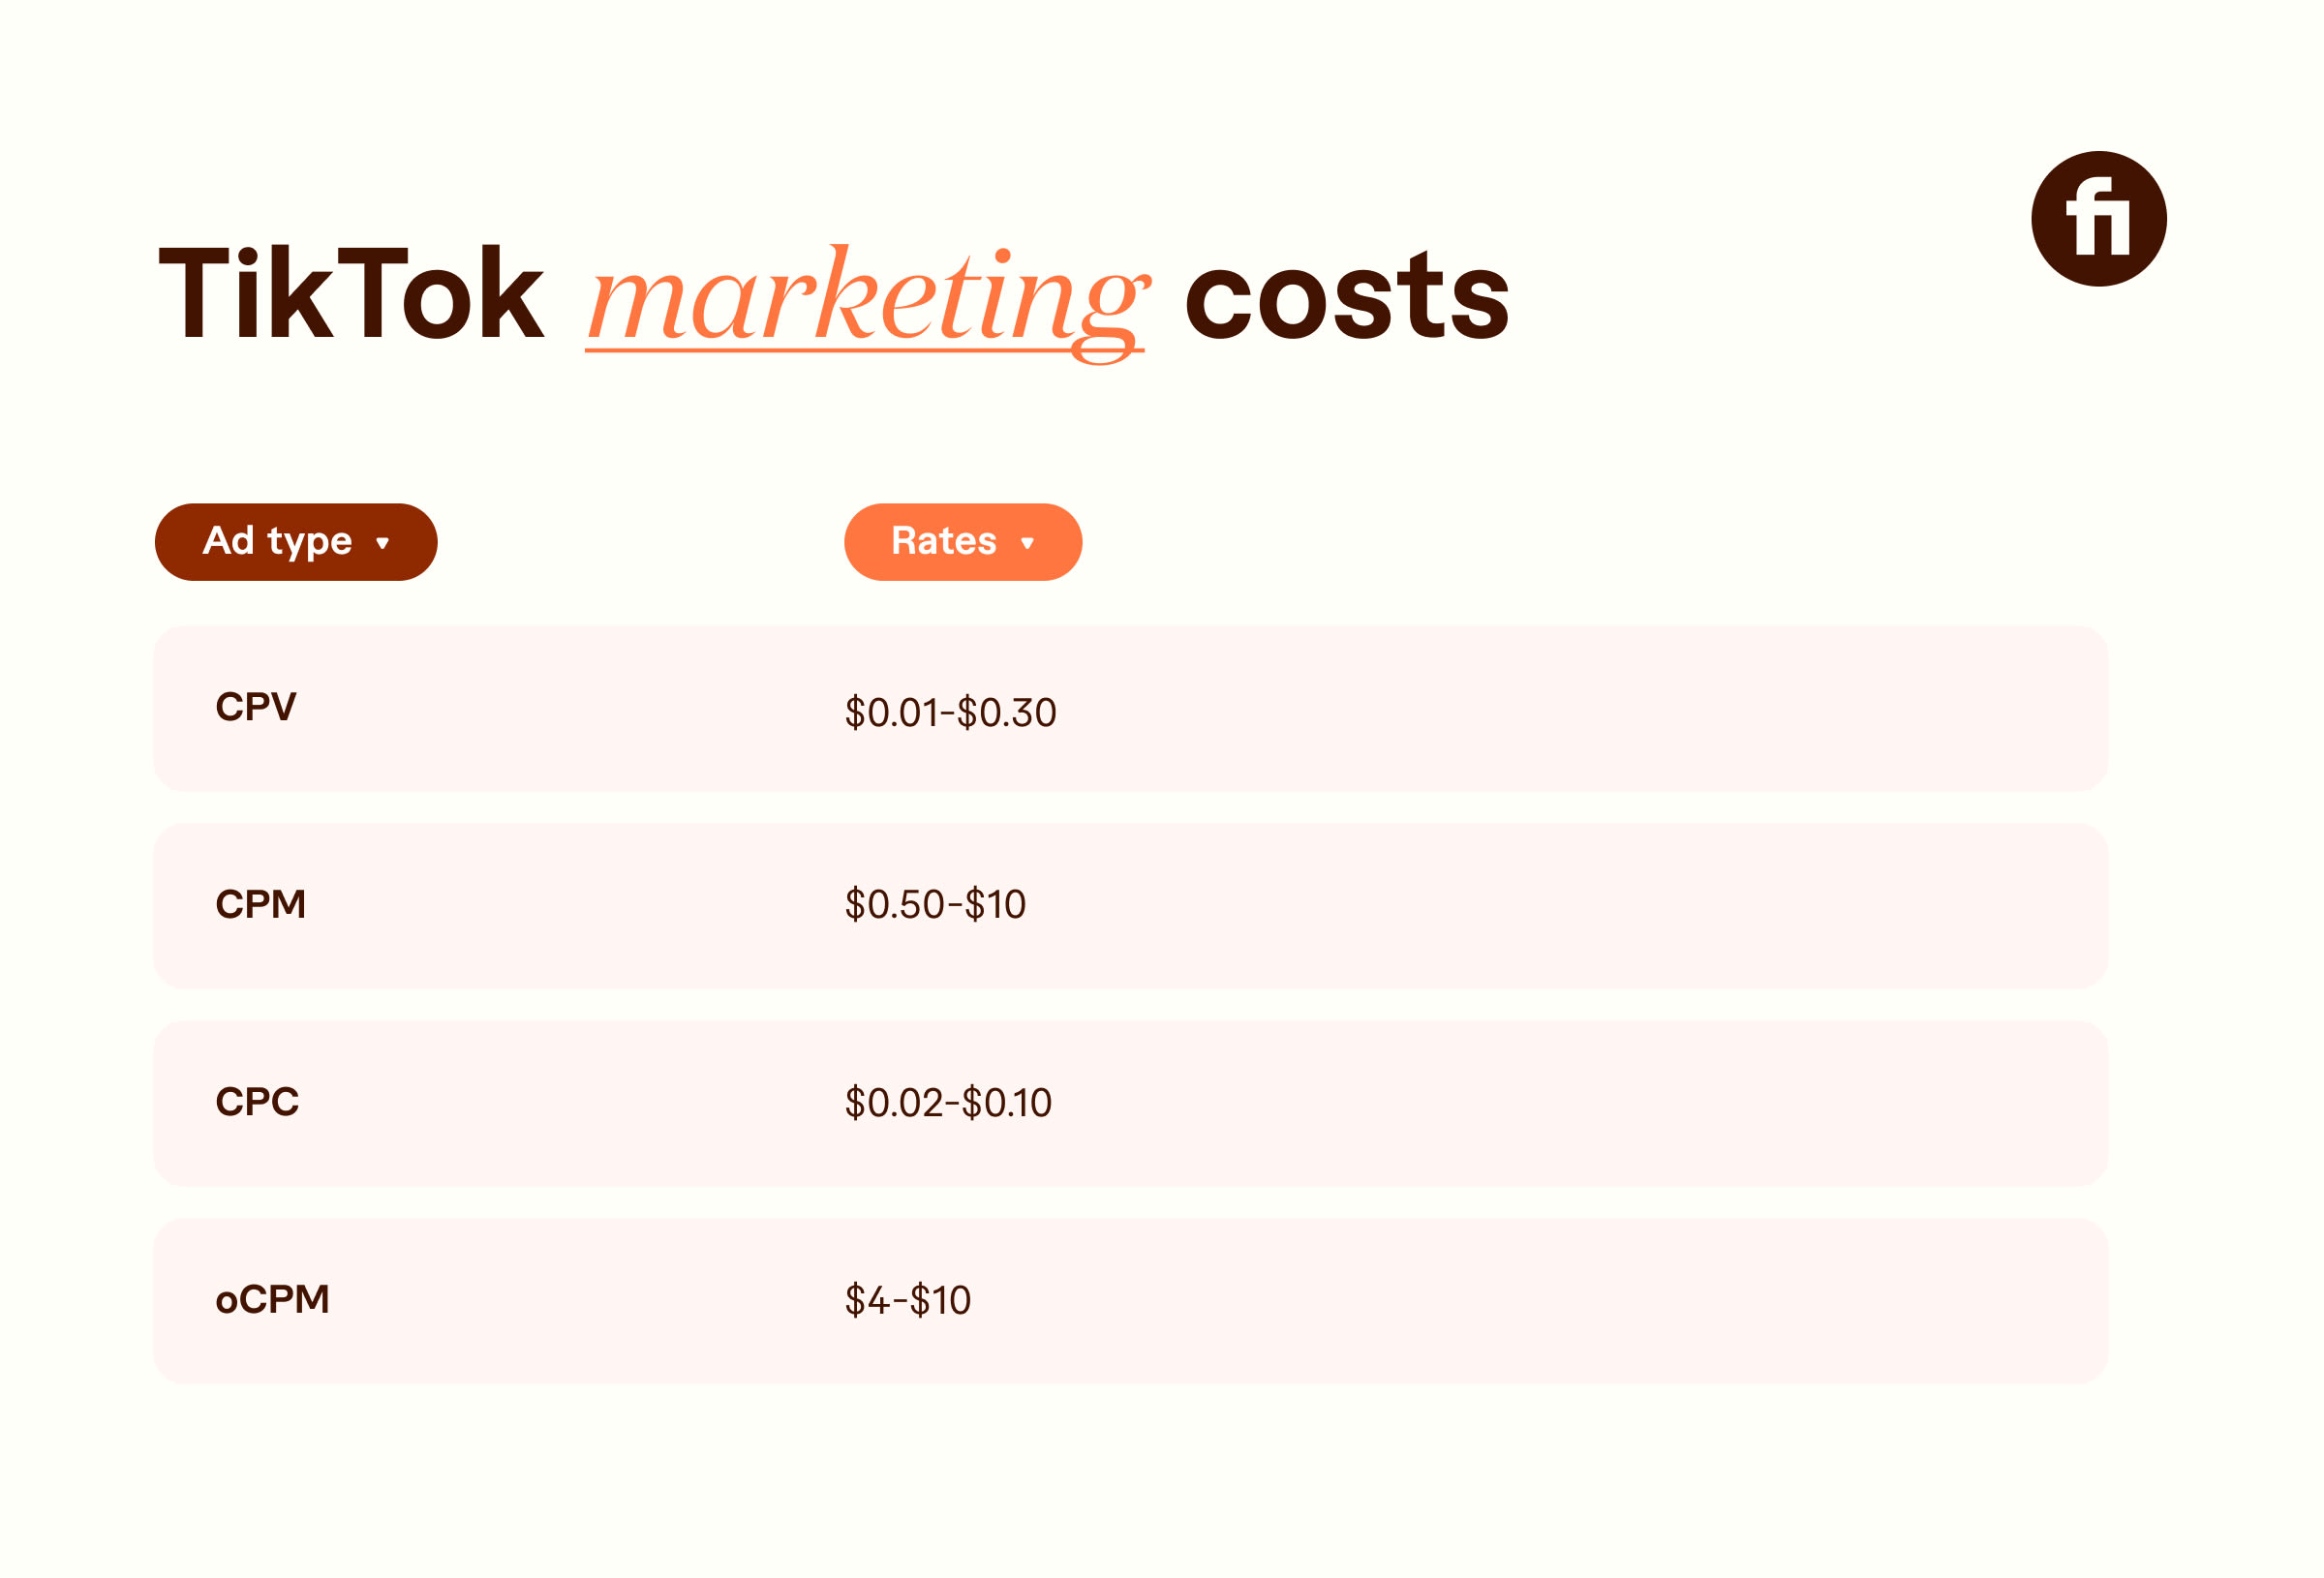 tiktok marketing costs table